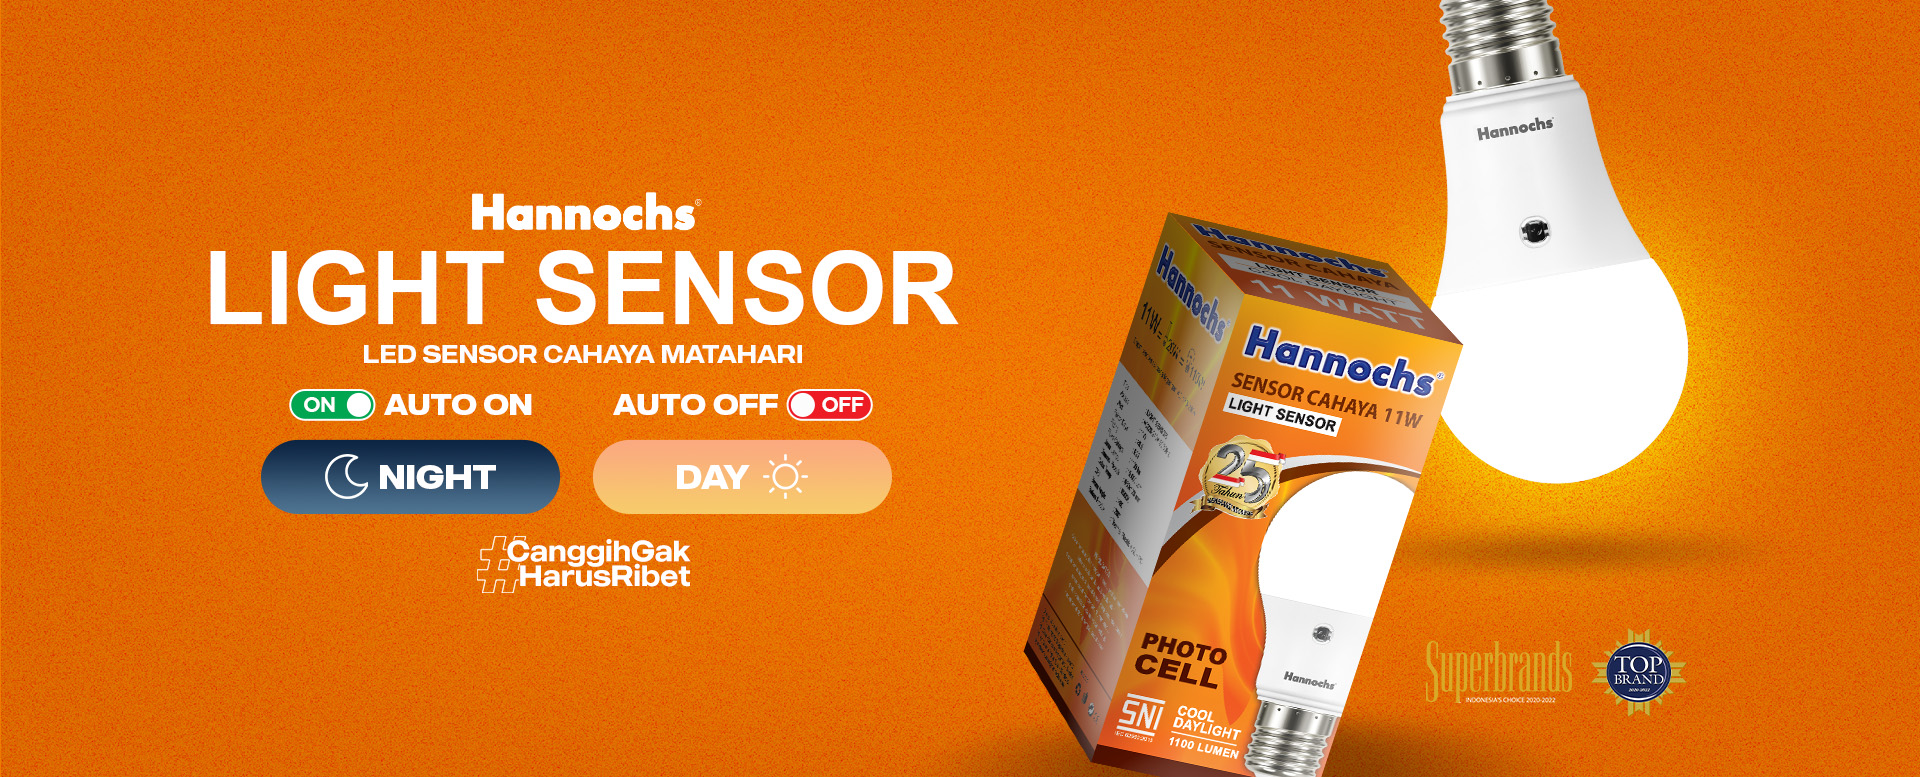 Hannochs Sensor Cahaya